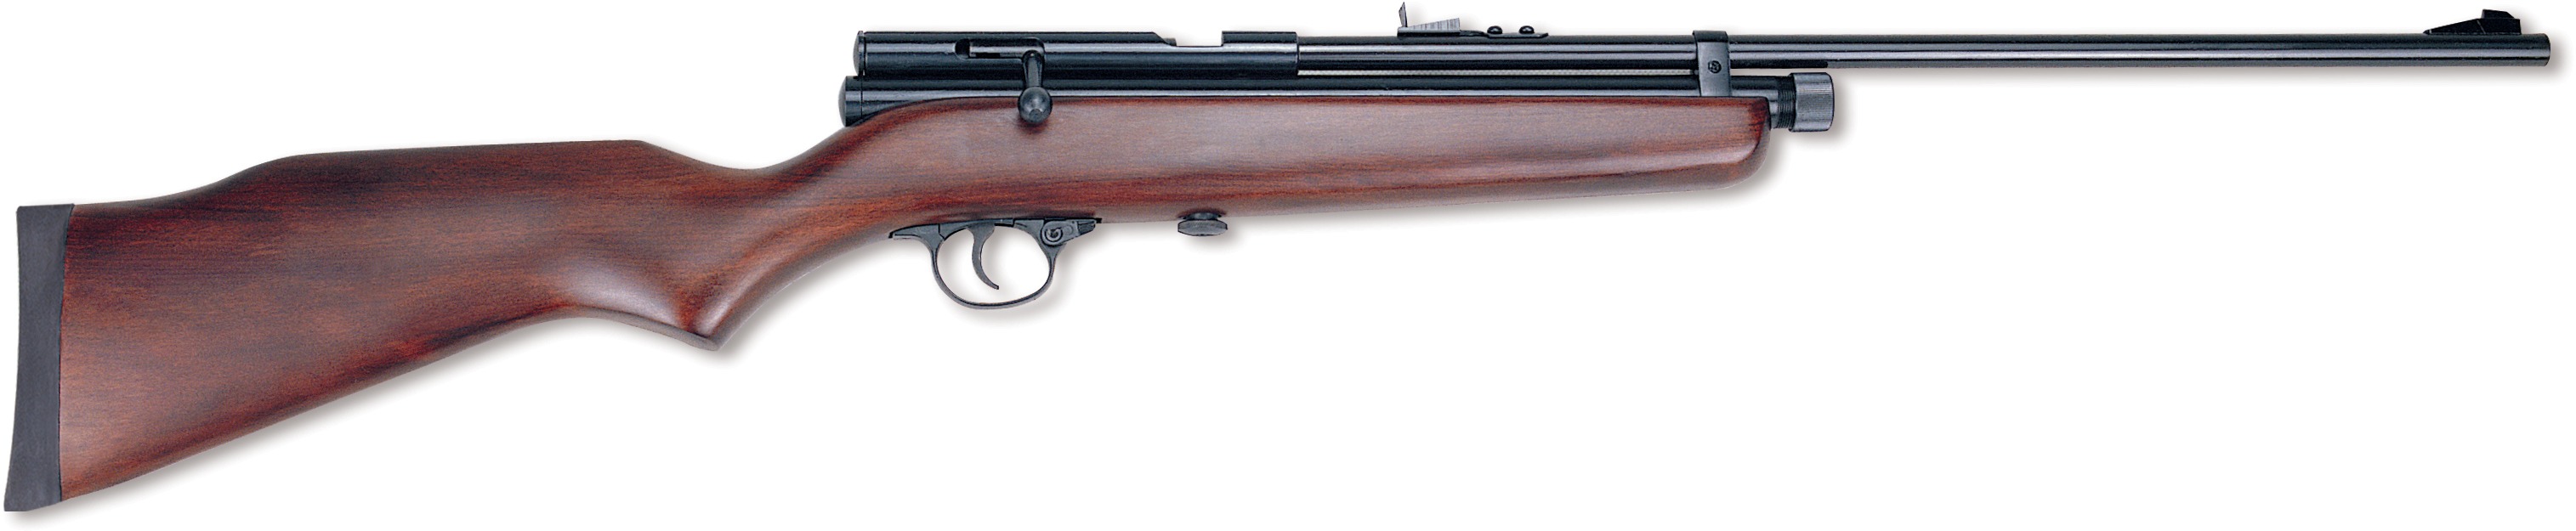 Beeman QB78177 SAG  InchCO2 Inch Rifle  650 fps .177 2 stage safety F/R | 026785020804